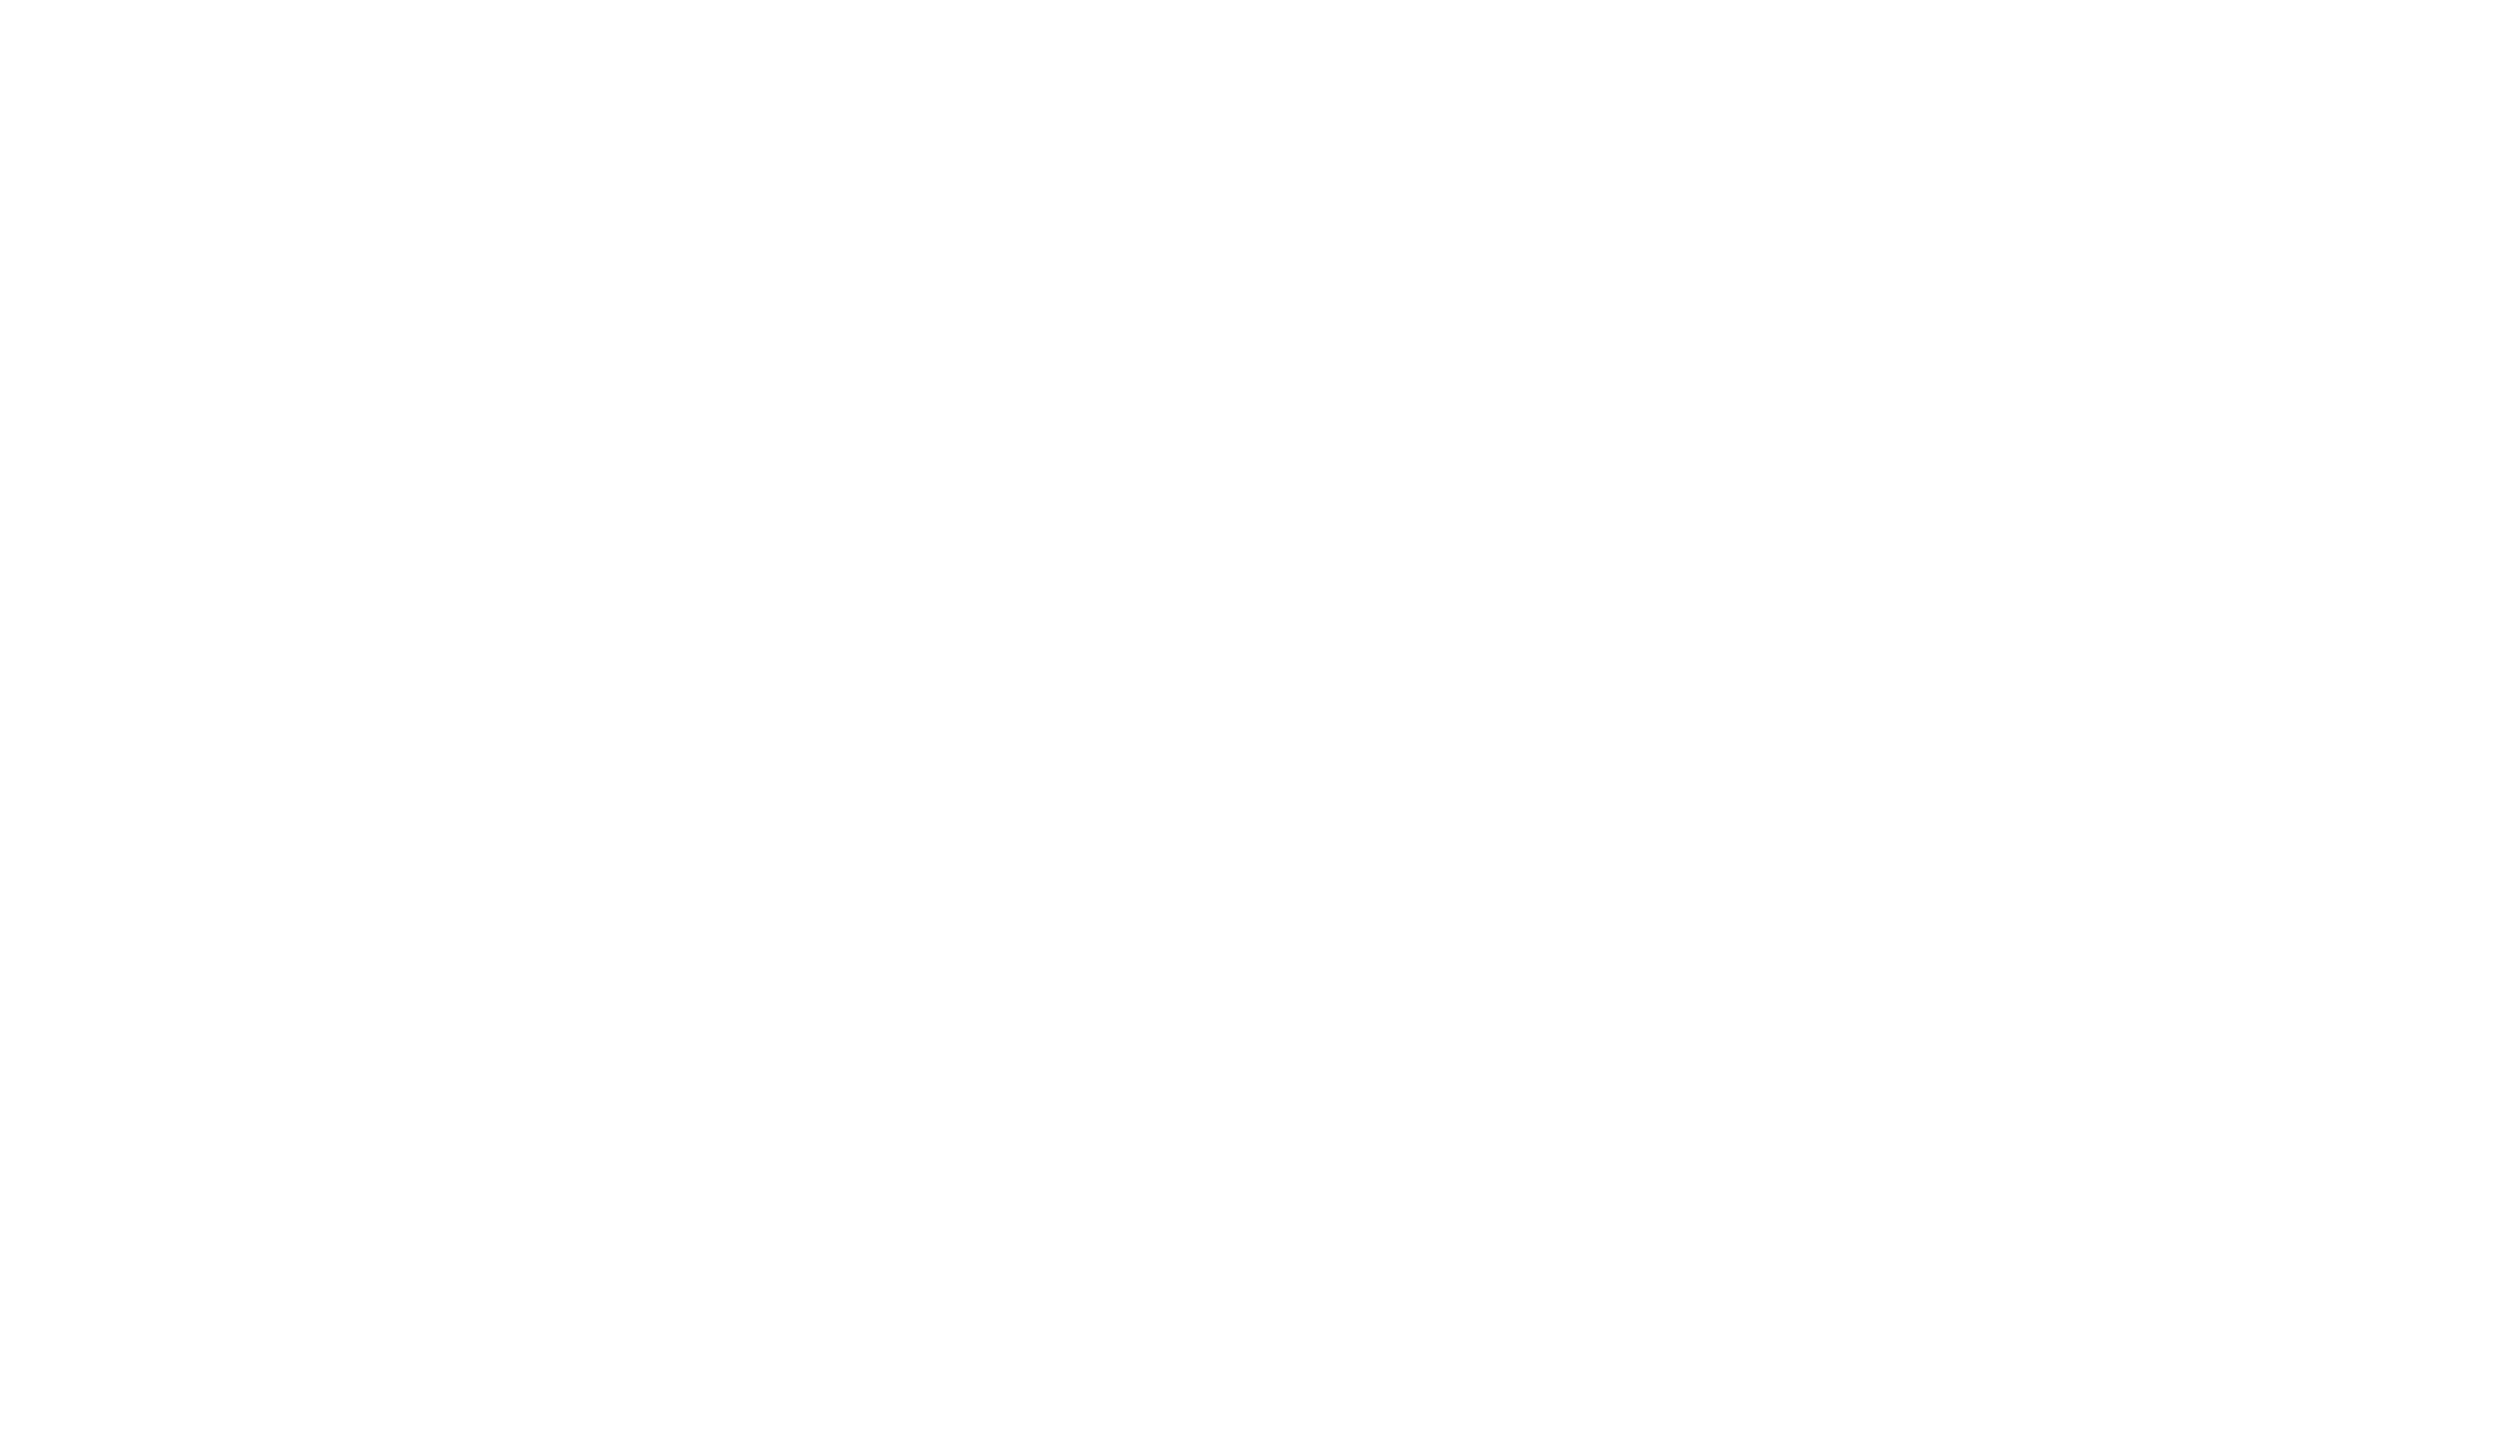 Elle of Buckhead Watermark for White Background